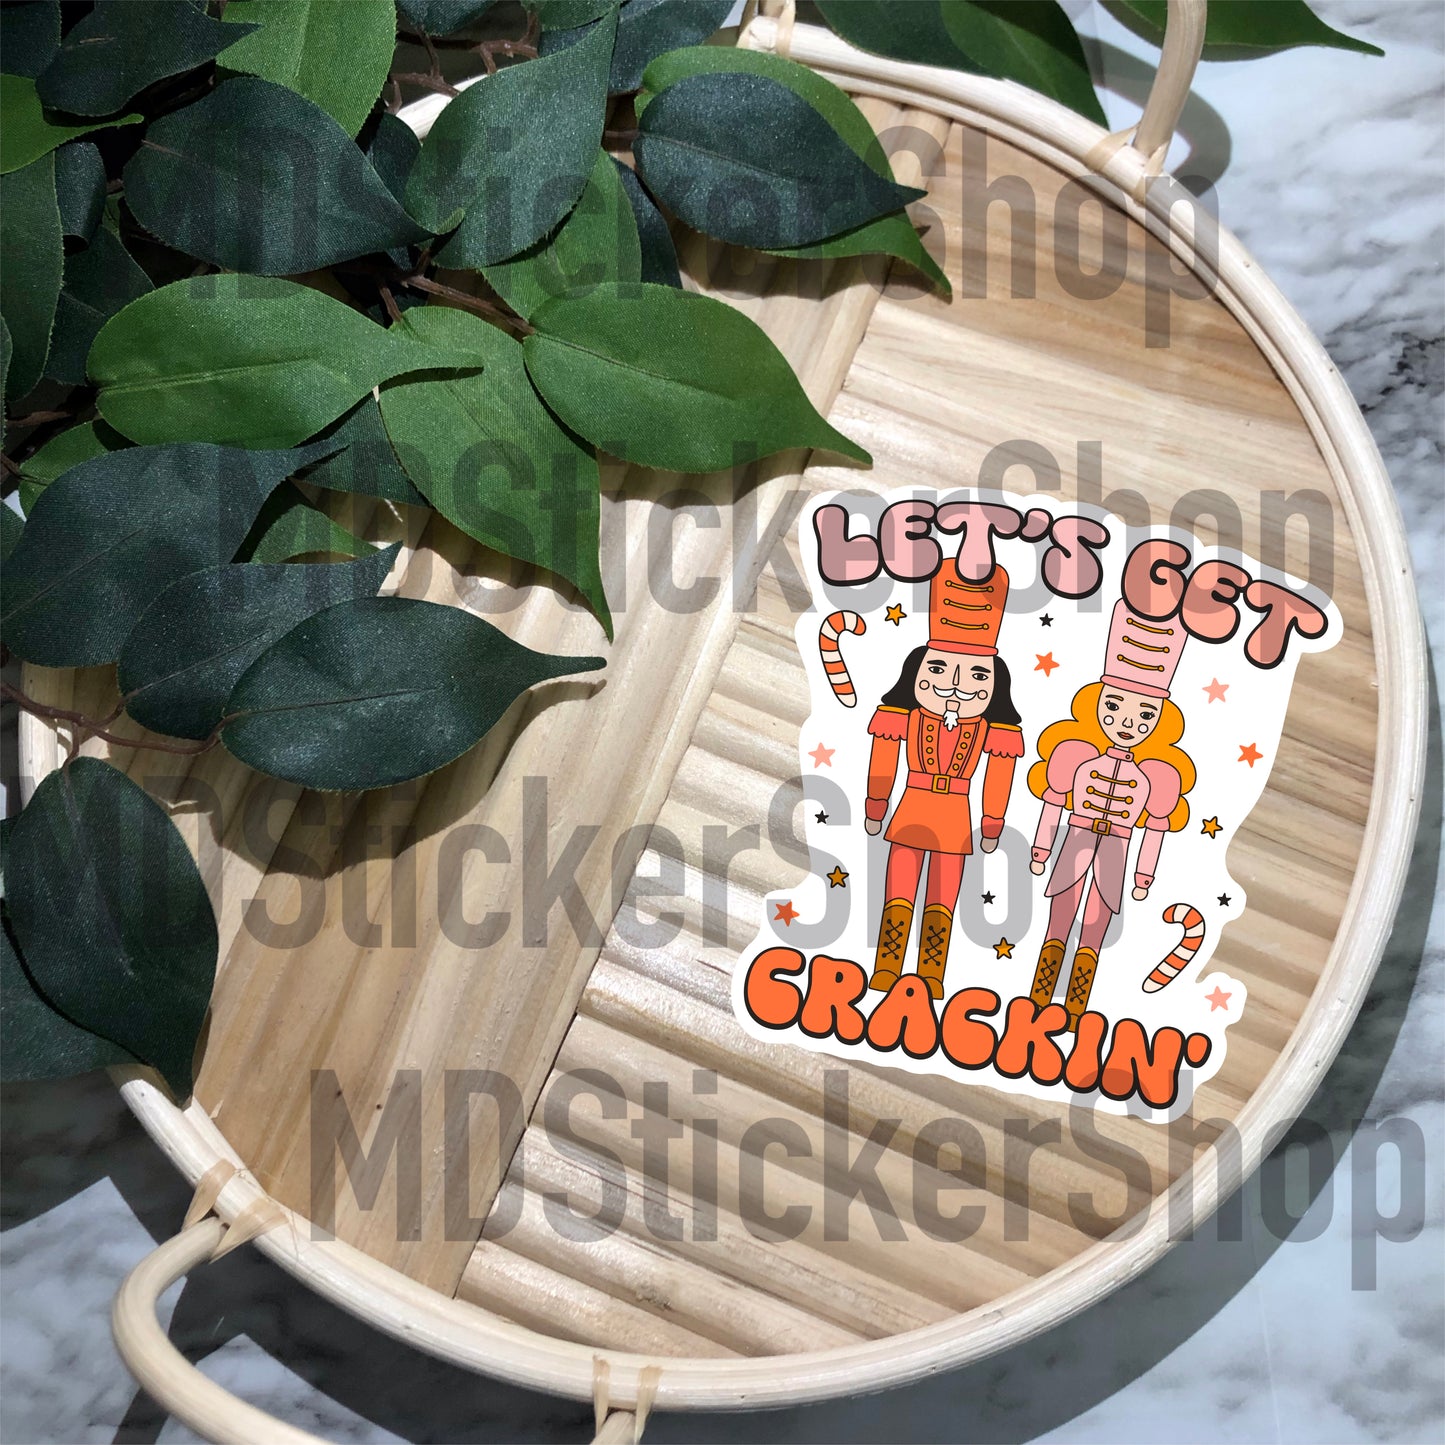 Let’s Get Crackin’ Nutcracker Vinyl Sticker